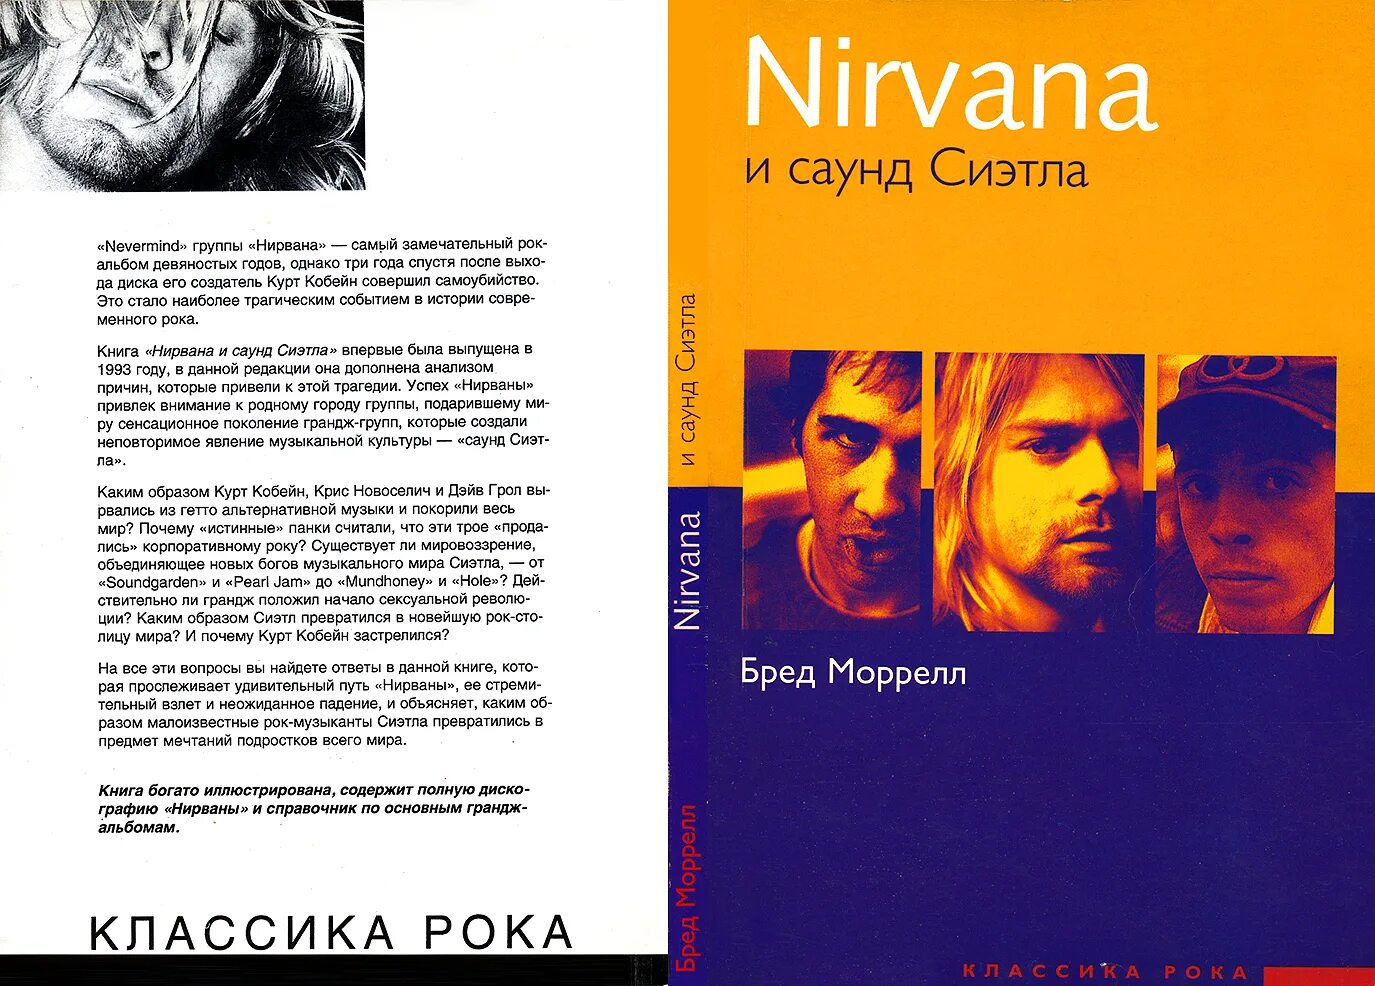 Книга Nirvana. Книги про музыкантов. Книги о рок группах. Курт Кобейн и Нирвана книга. Nirvana smells на русском